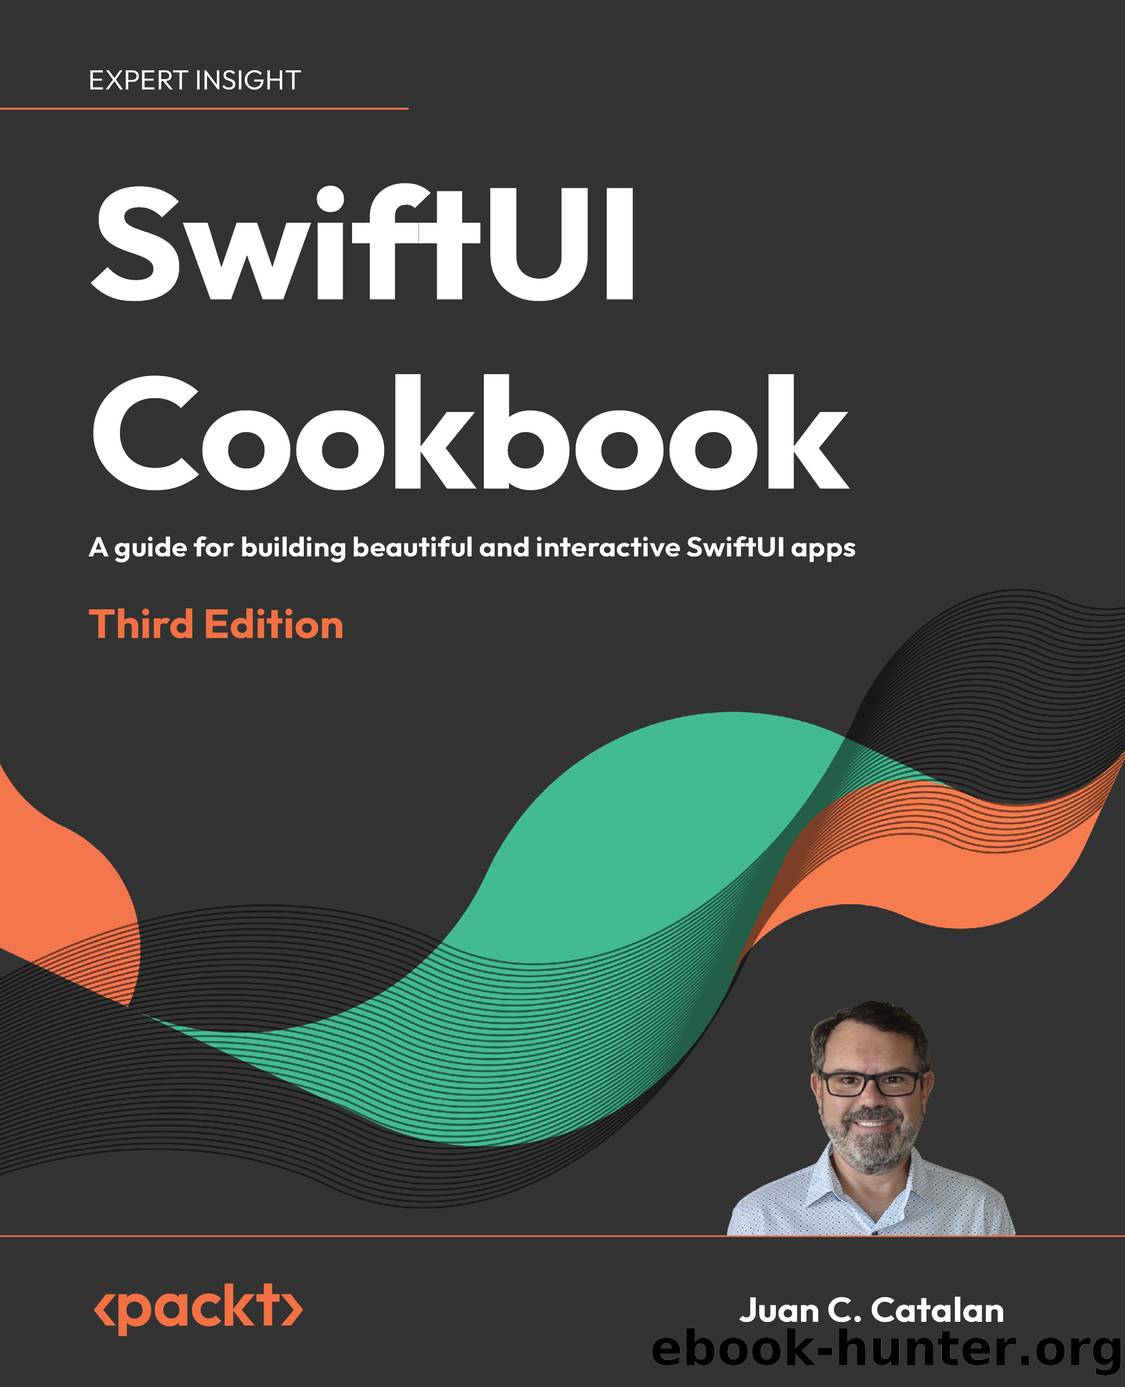 SwiftUI Cookbook by Juan C. Catalan